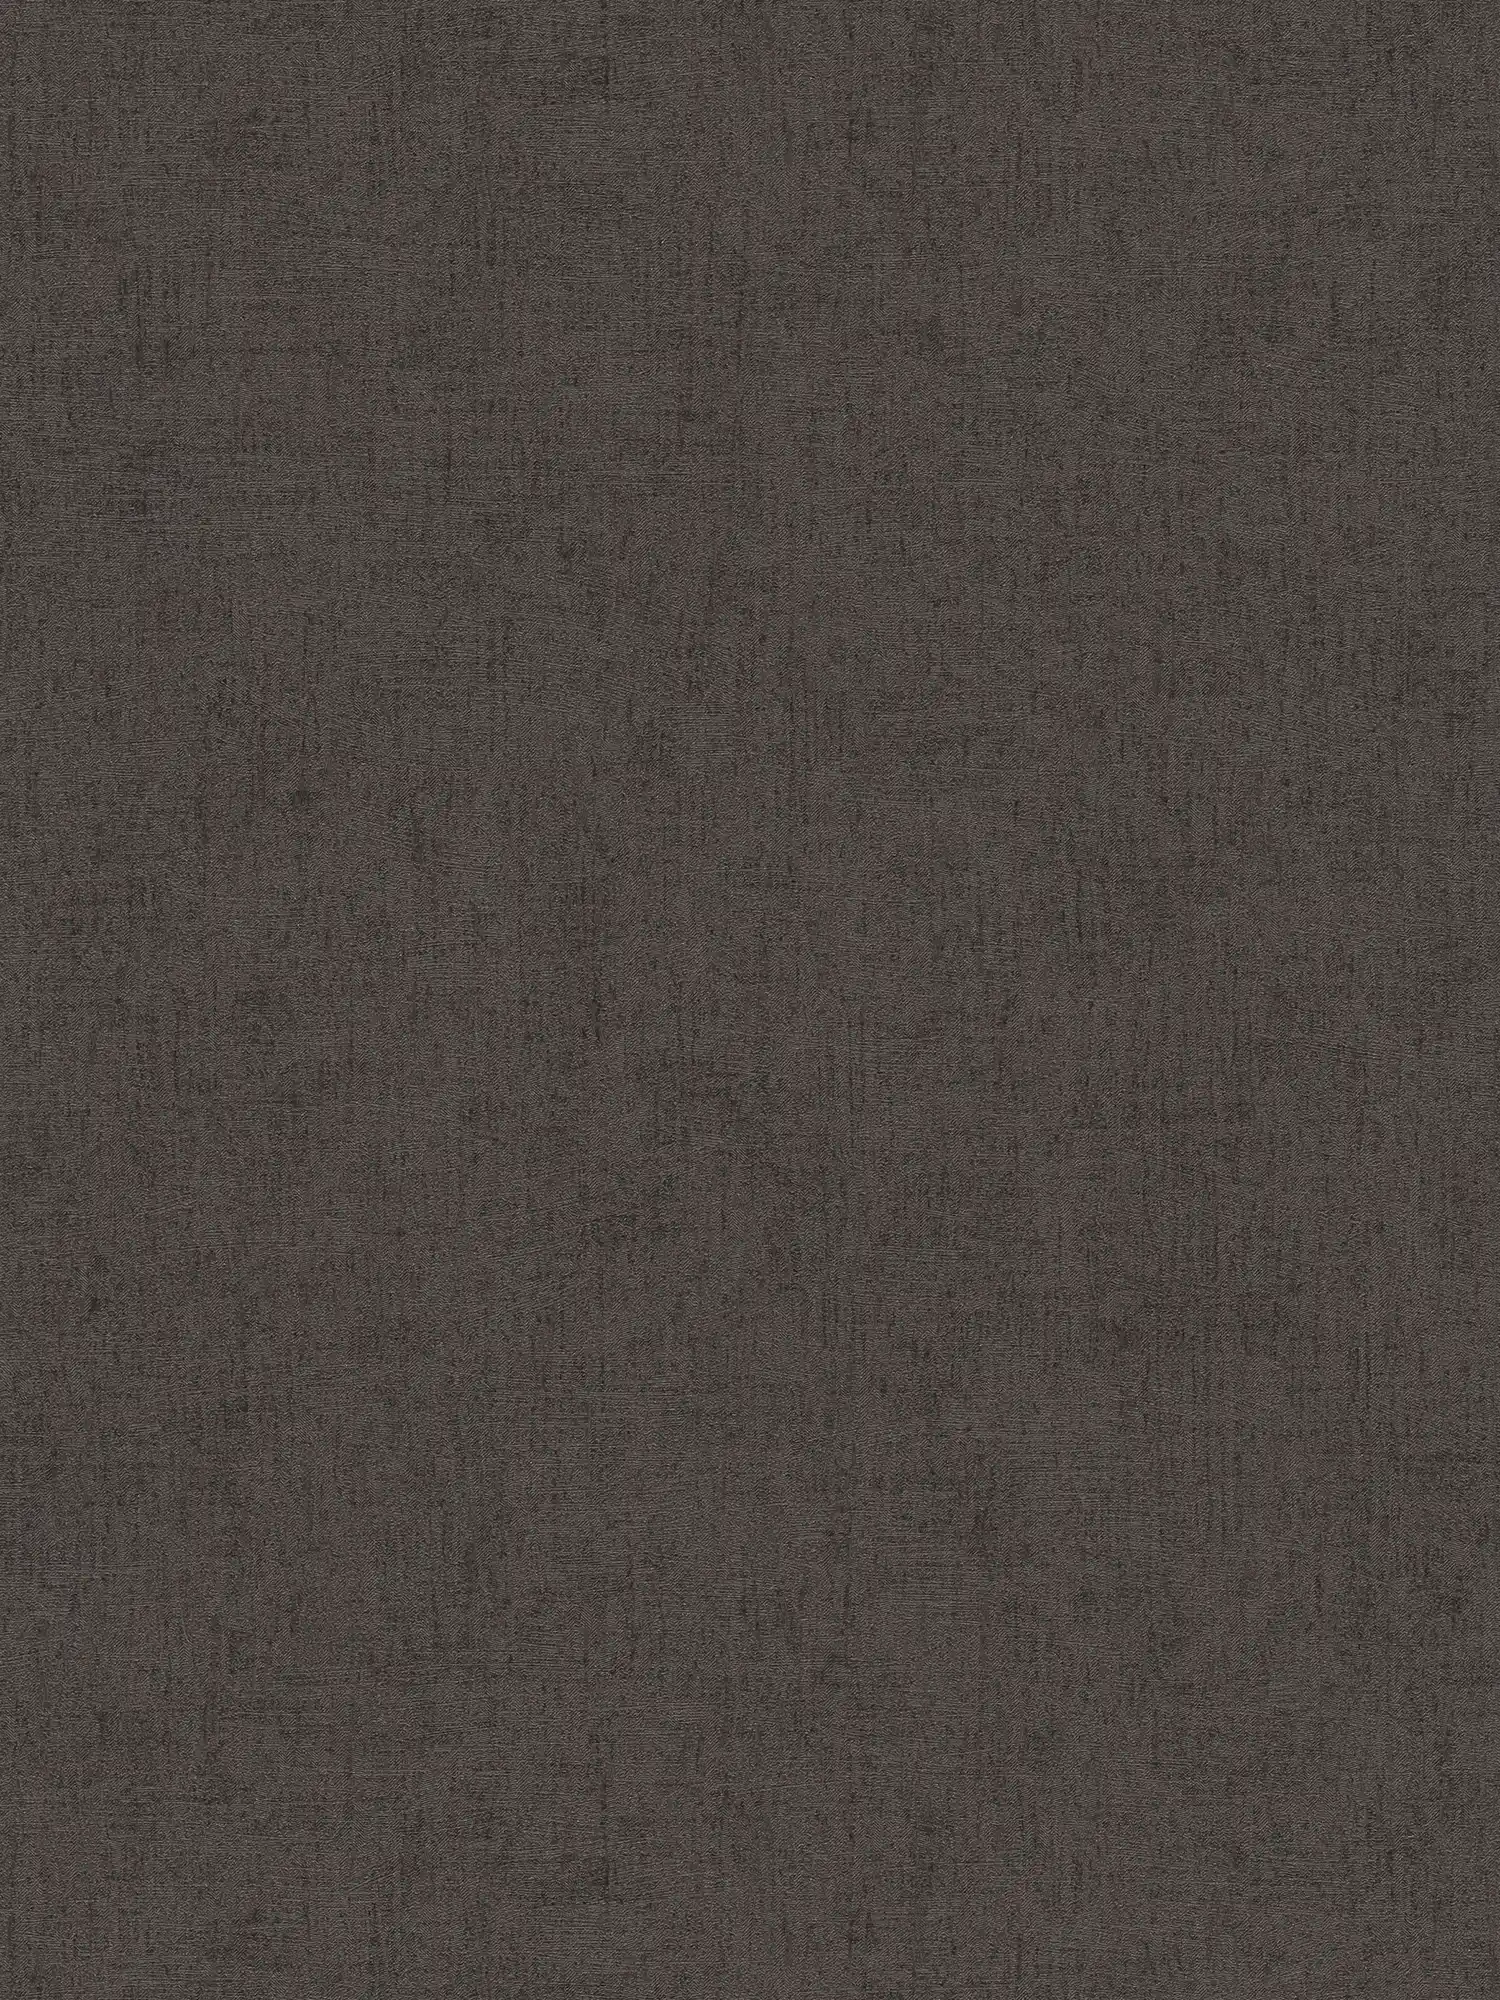 Wallpaper dark brown with gloss & metallic effect - brown, metallic
